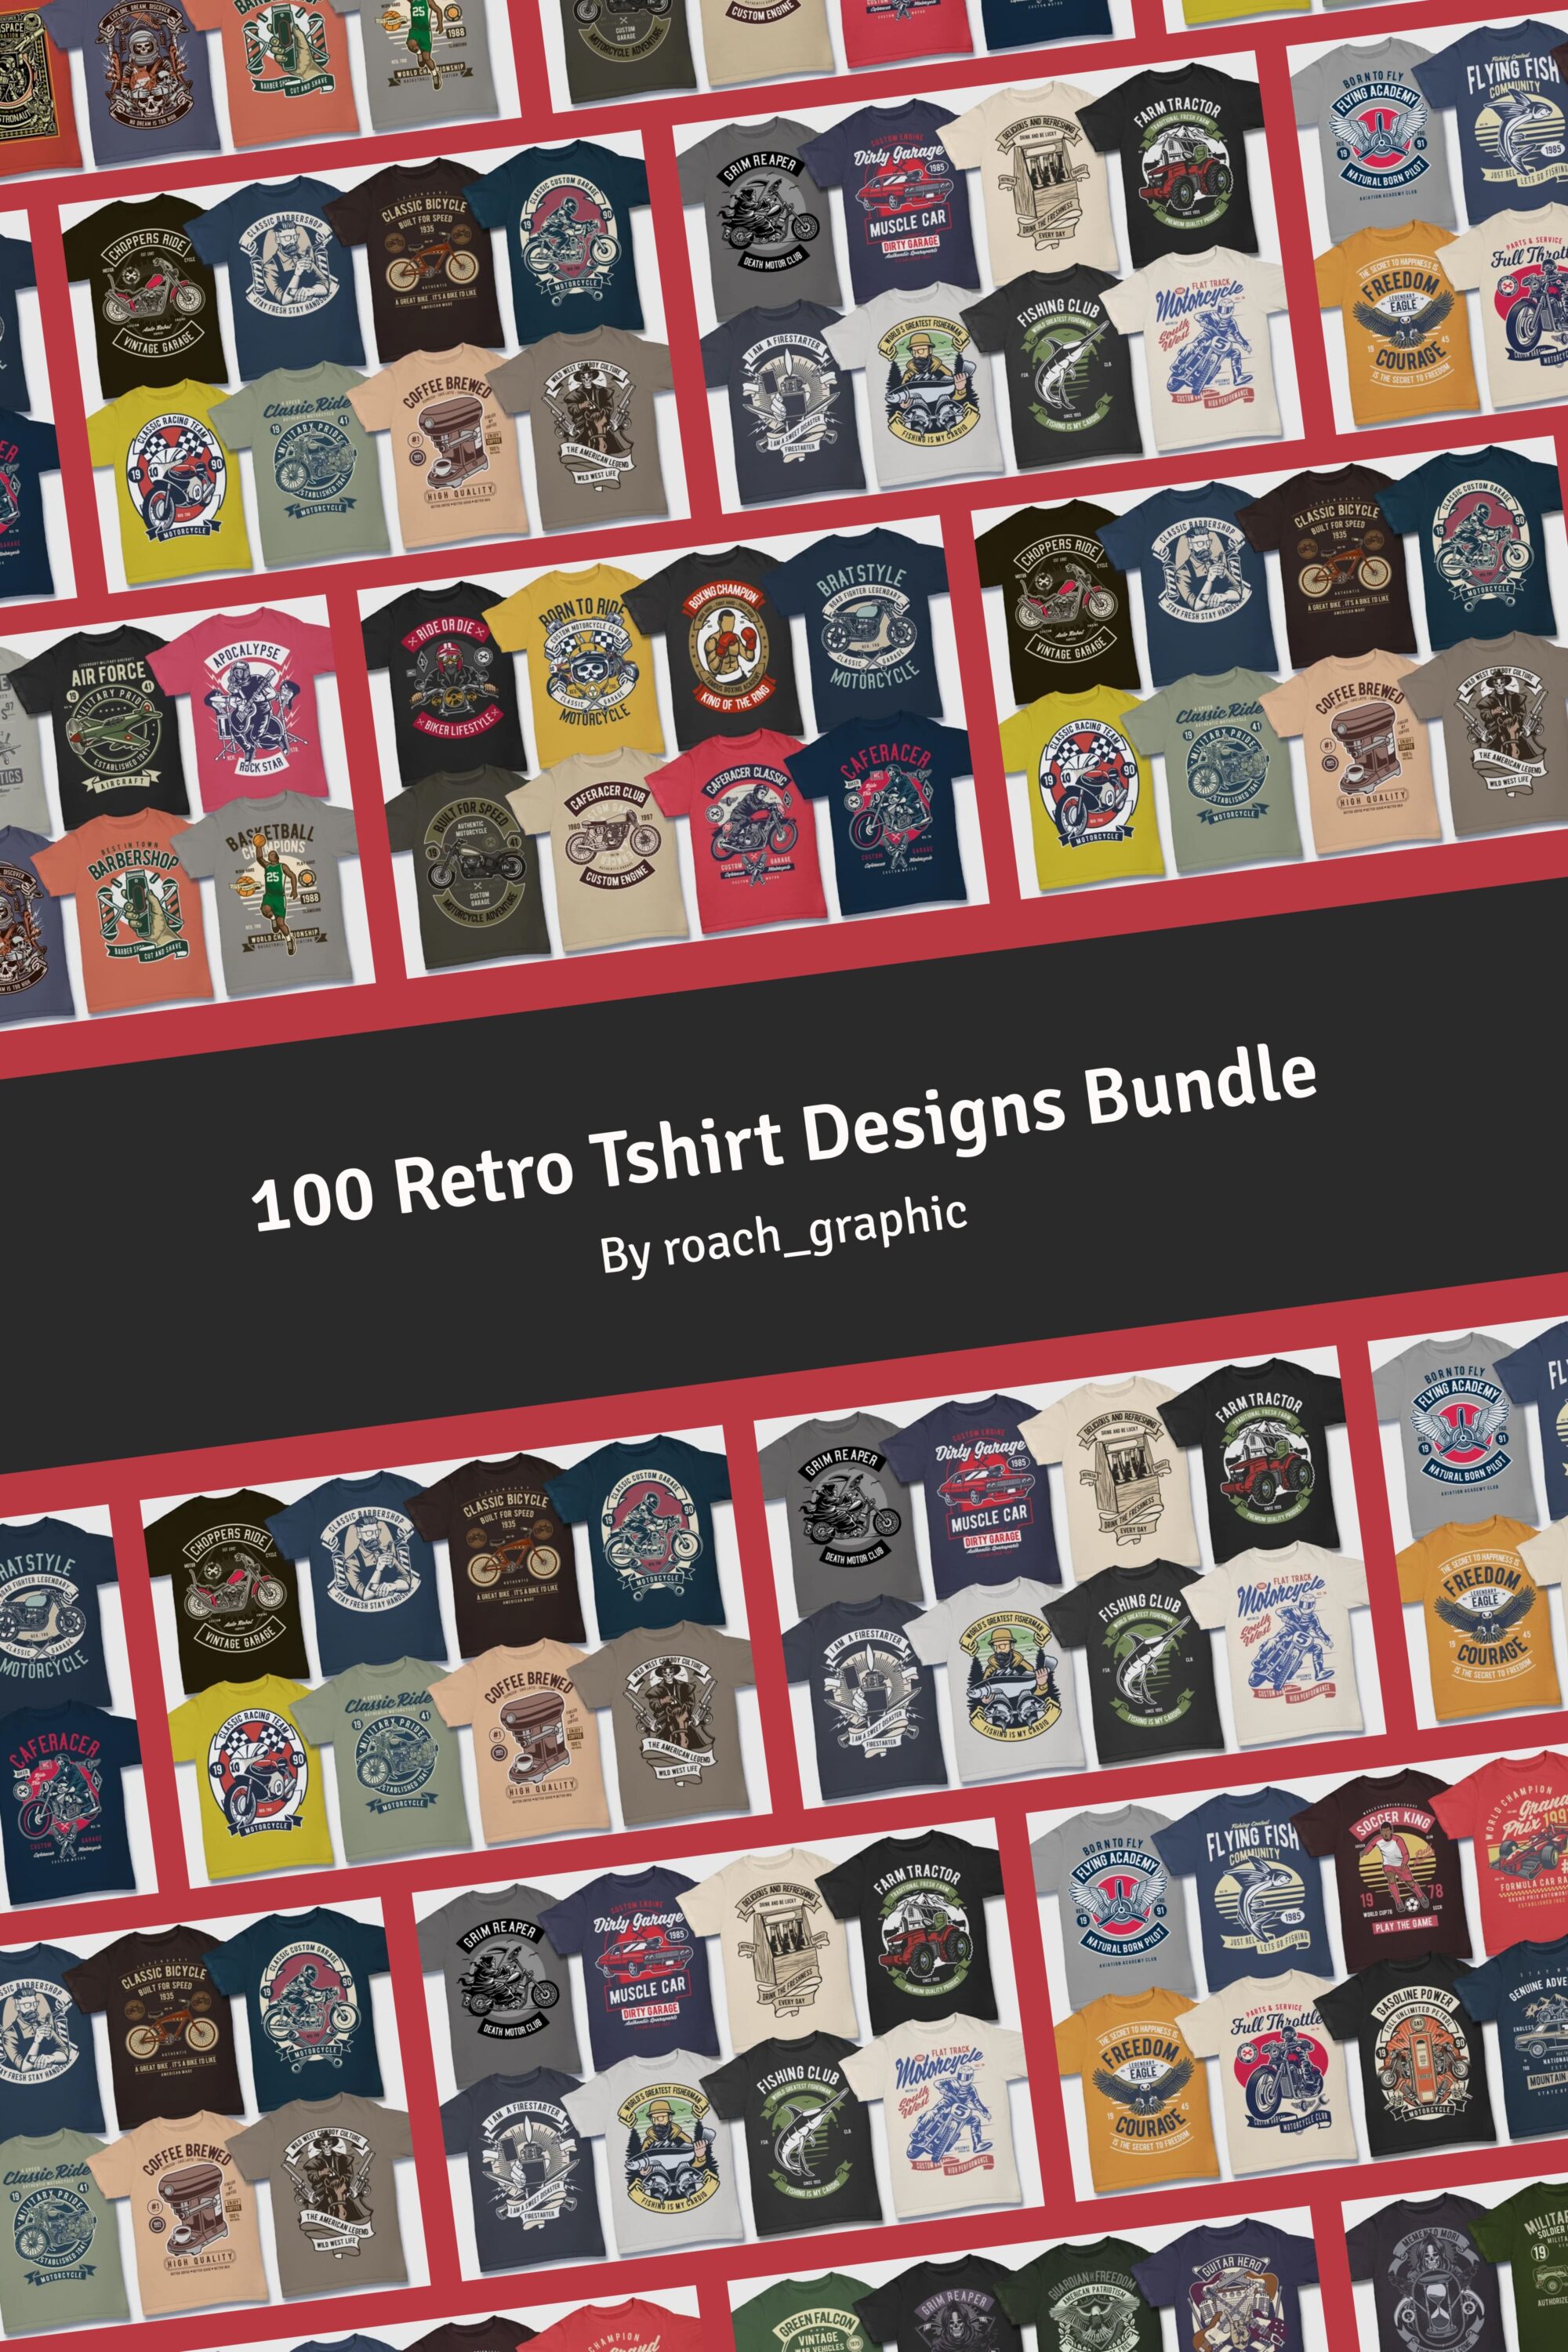 100 Retro Tshirt Designs Bundle pinterest image.